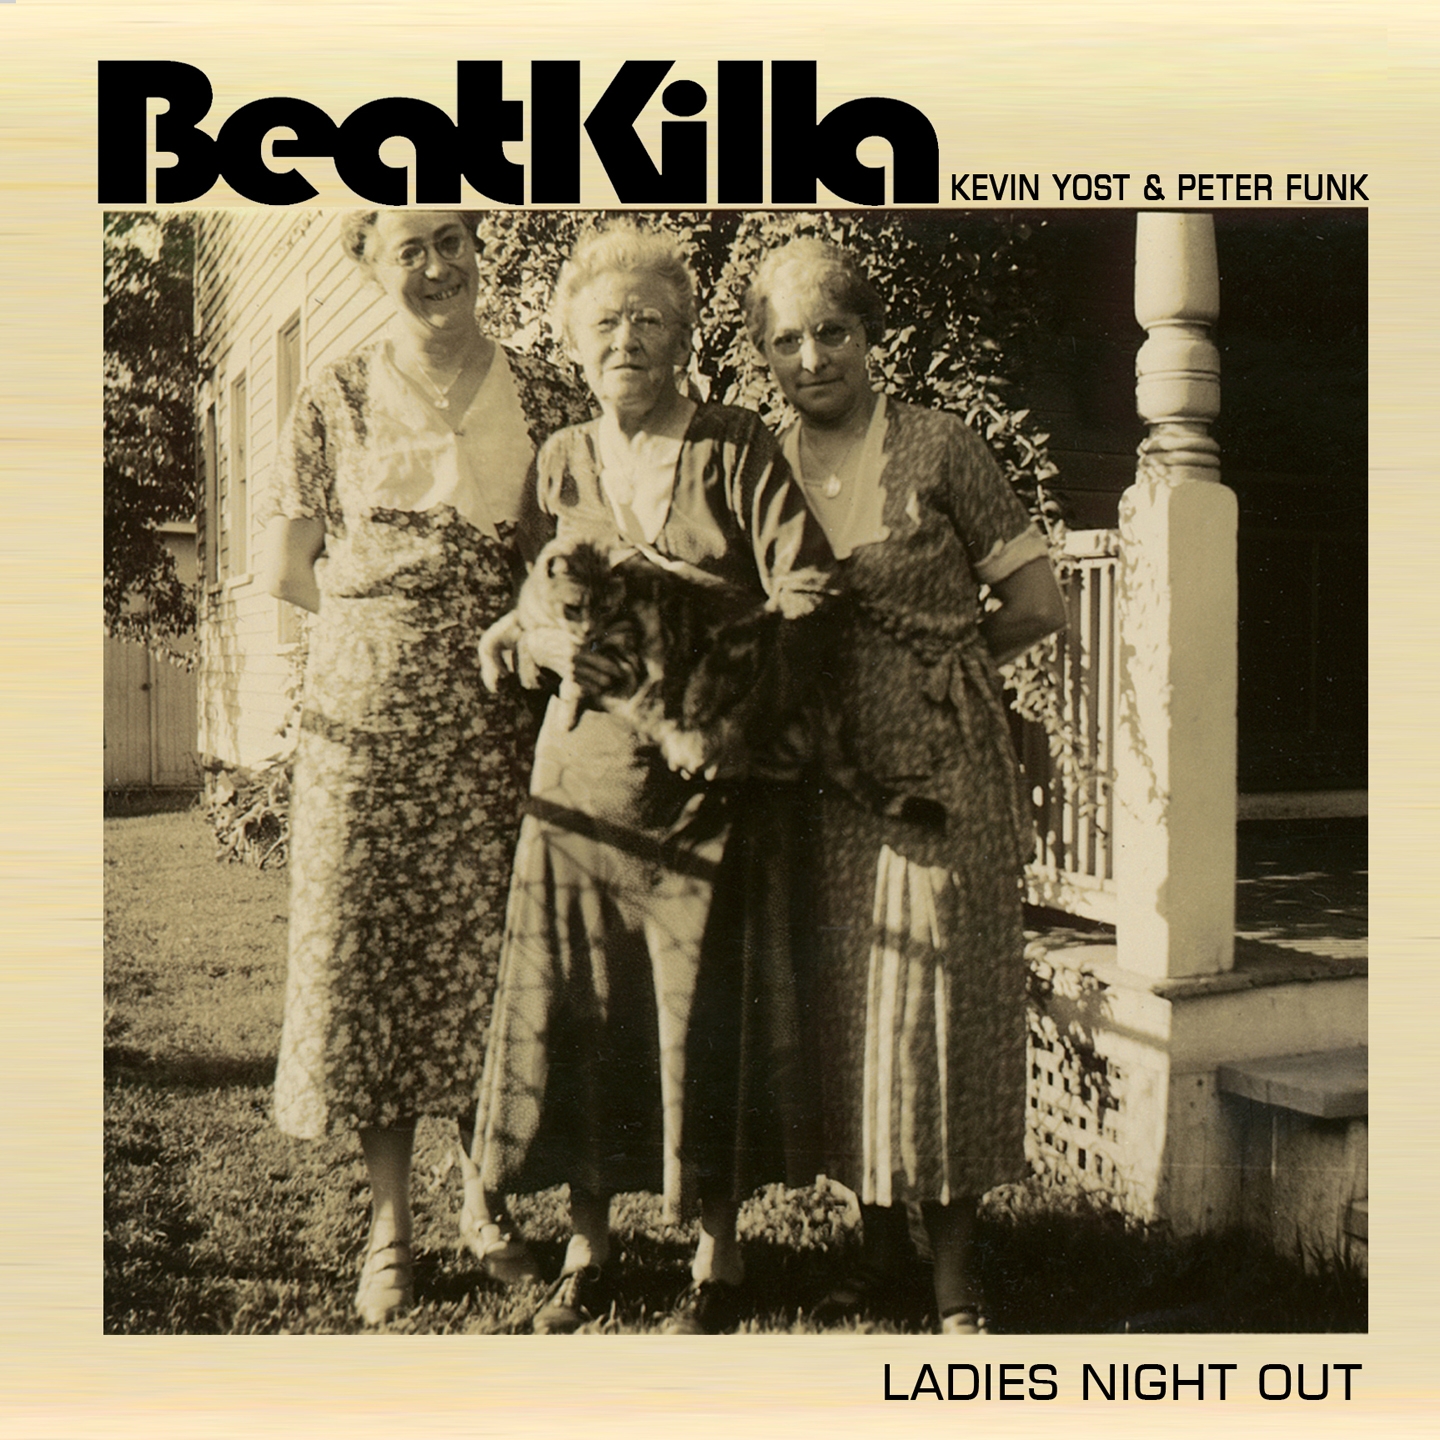 Ladies Night Out (BeatKilla)